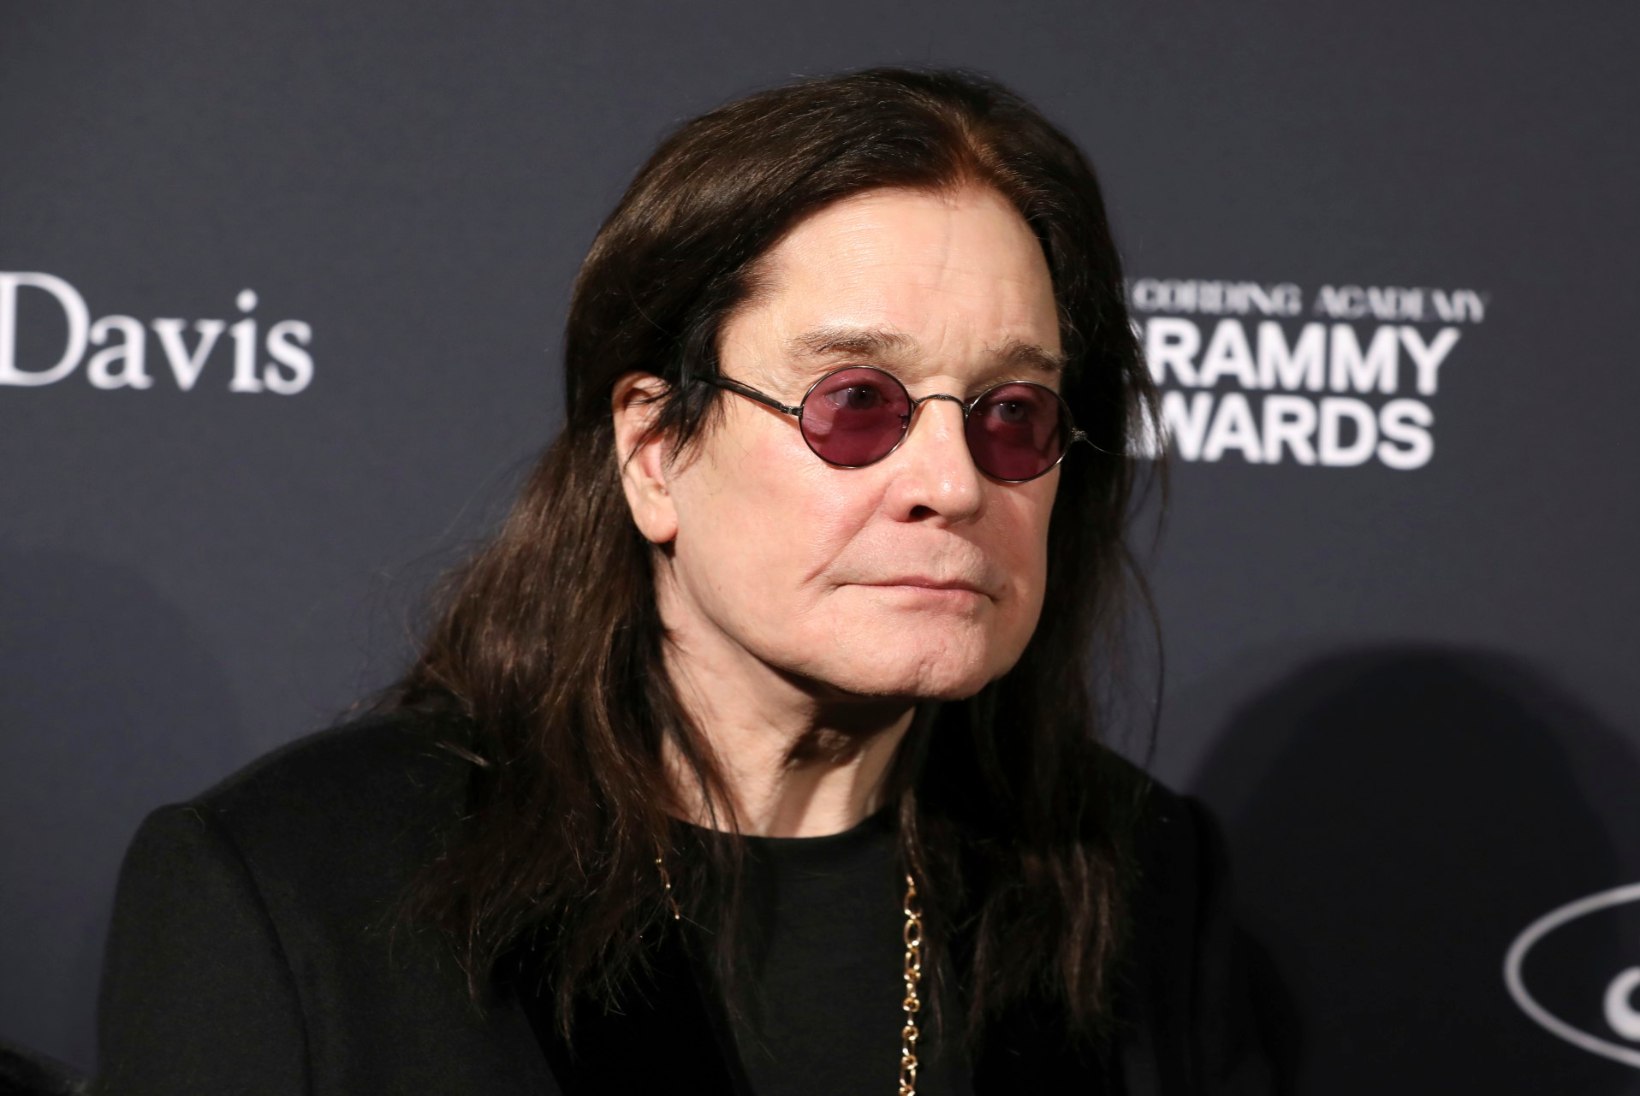 Ozzy Osbourne piinleb kirjeldamatutes valudes